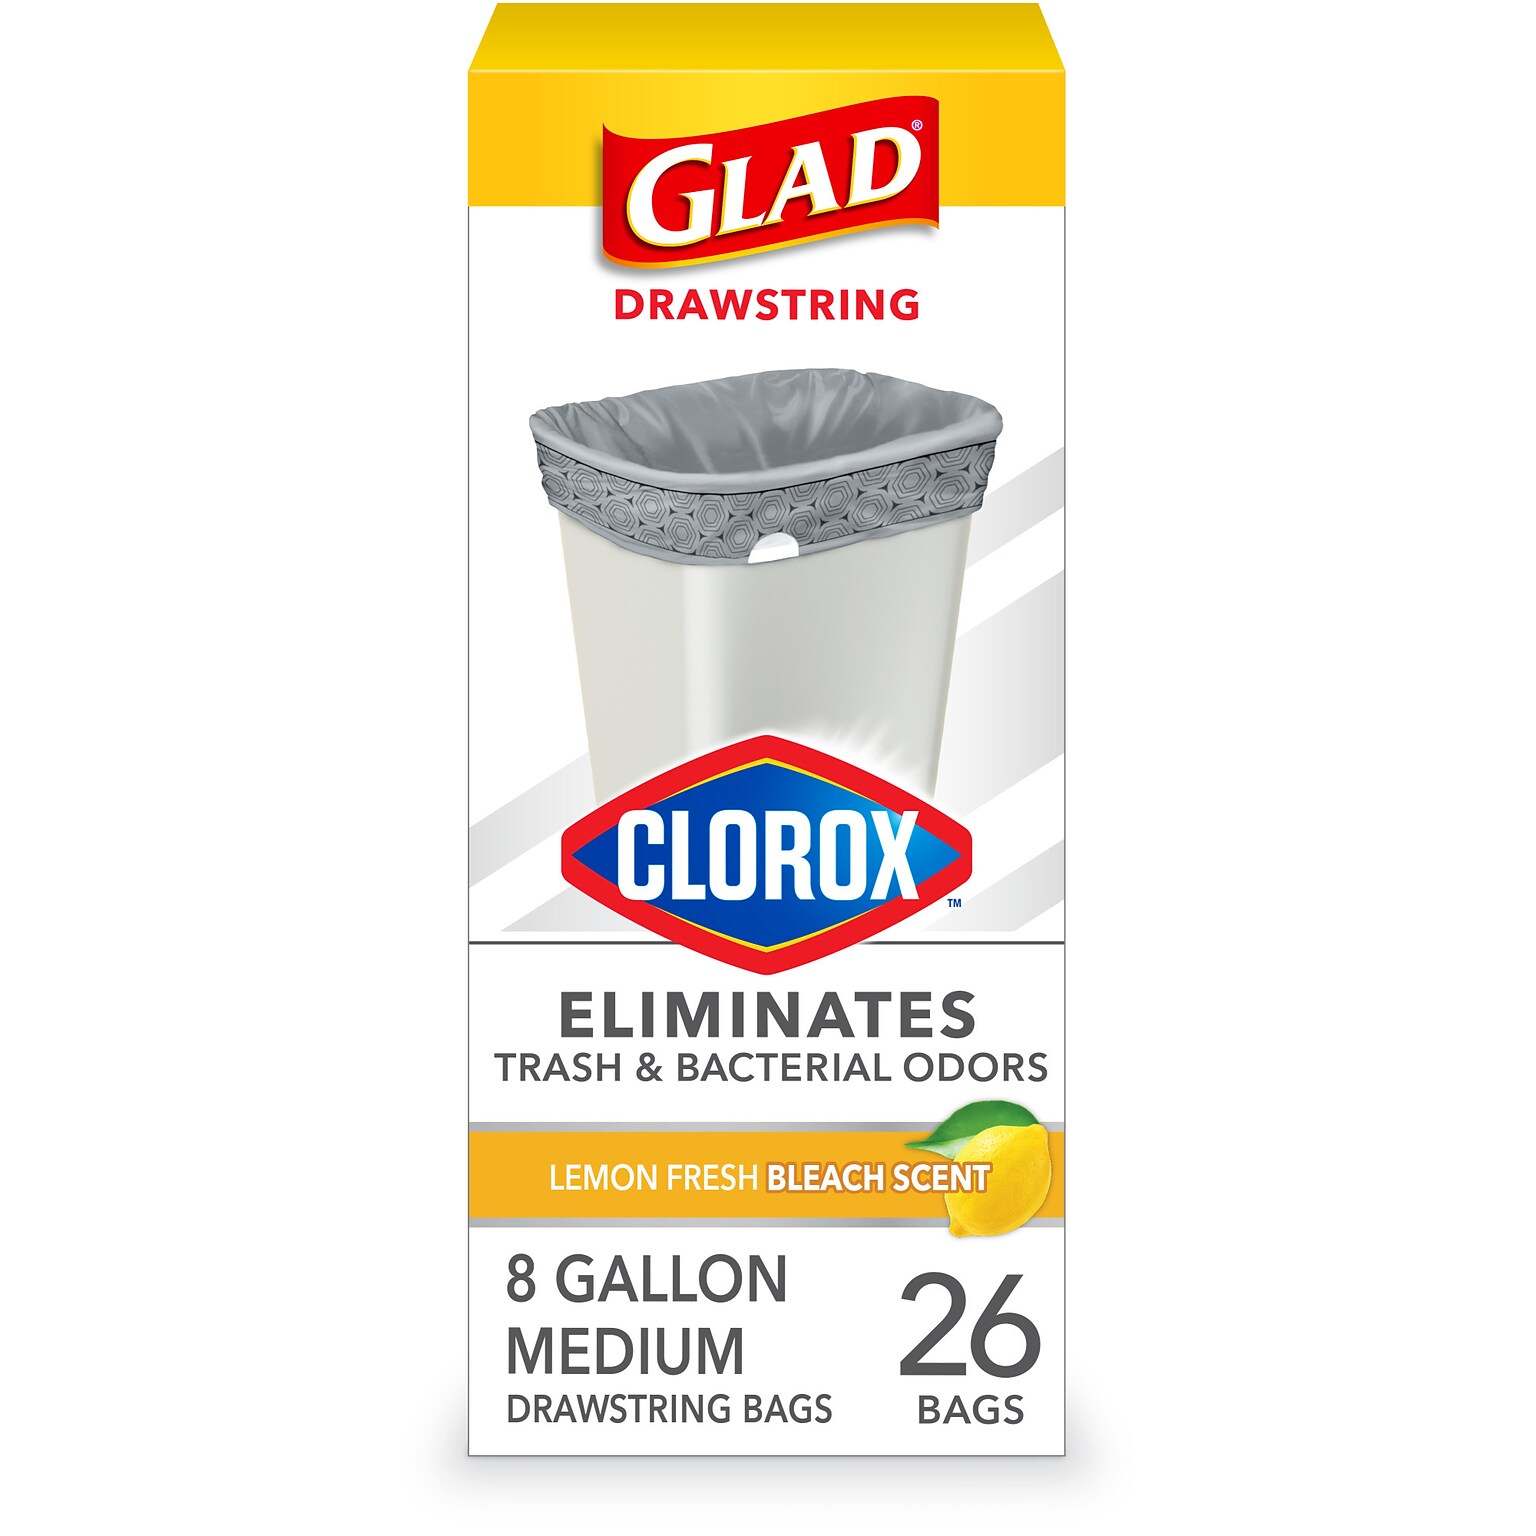 Glad Medium Drawstring Trash Bags with Clorox, 8 Gallon, Grey, Lemon Fresh Bleach Scent, 26/Box(79316)